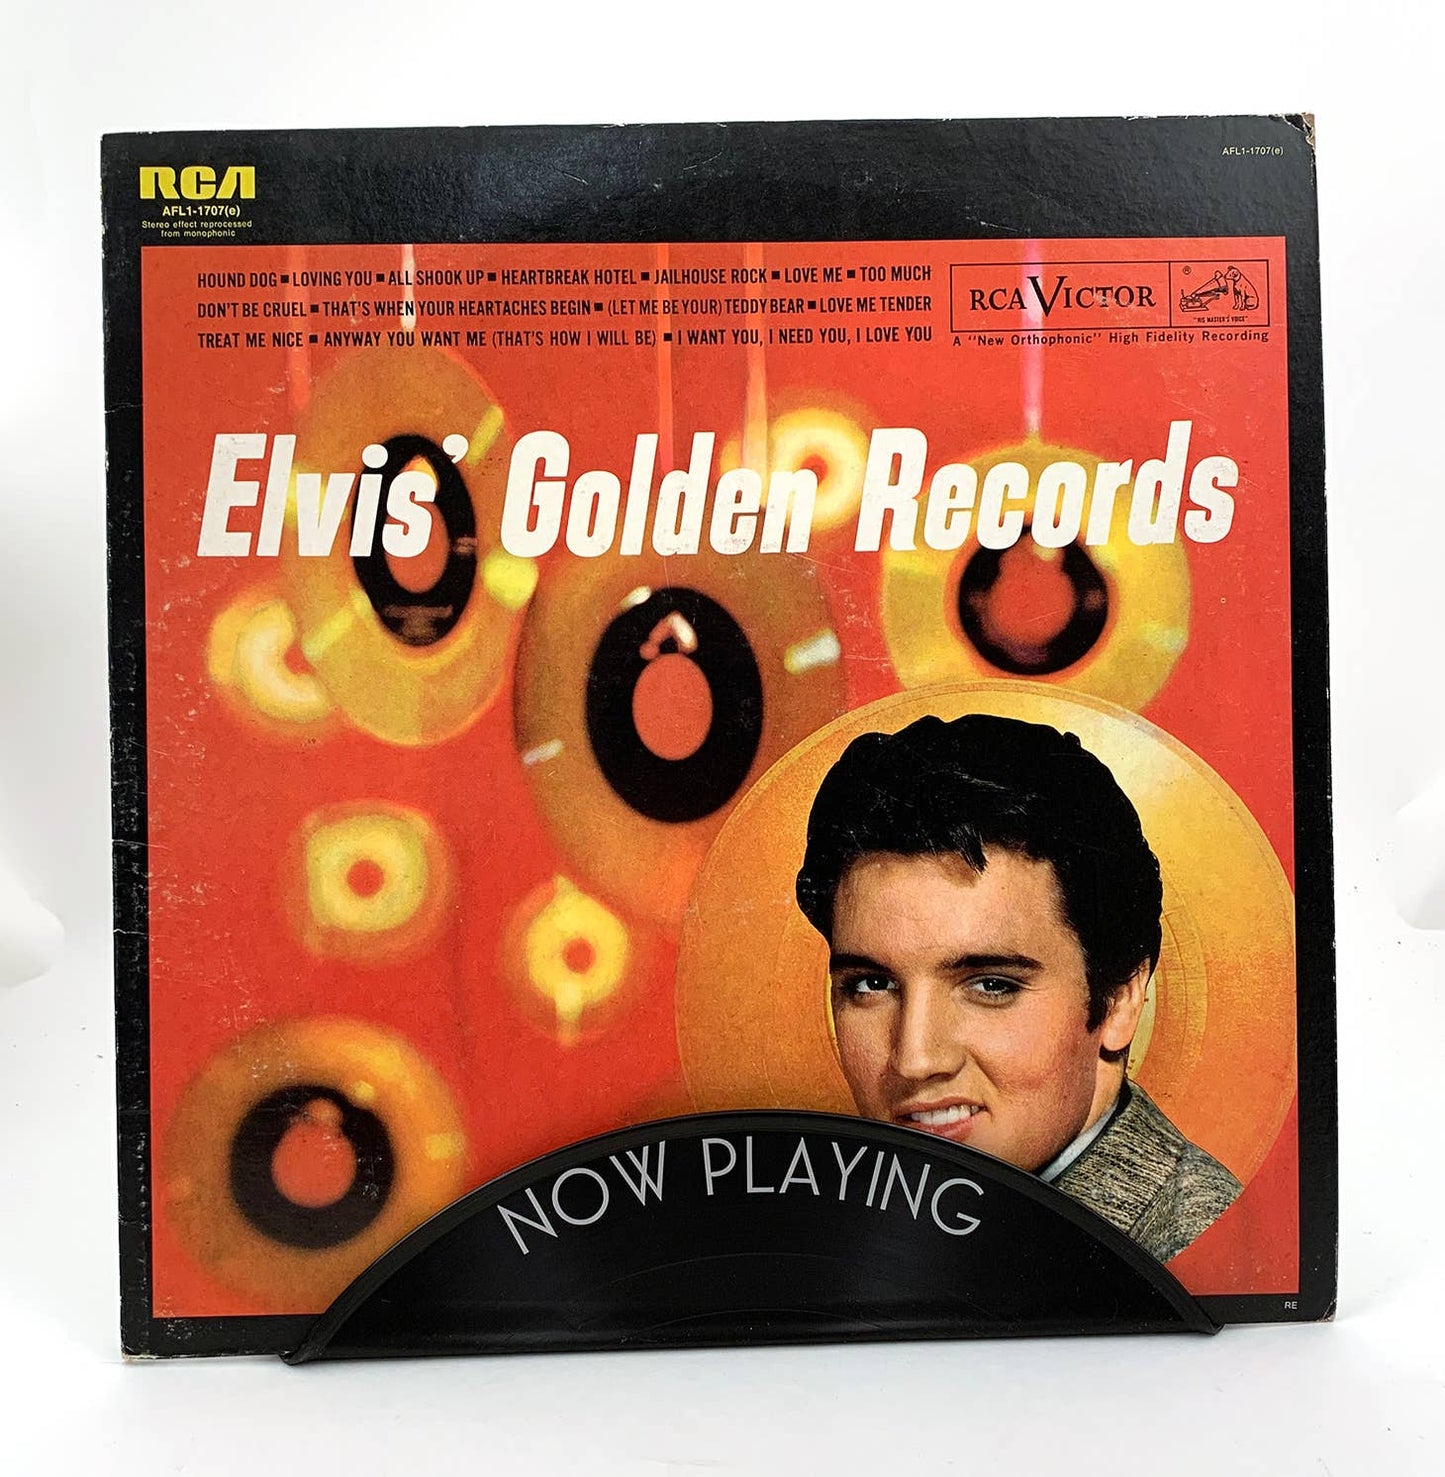 LP Vinyl Record Album Cover Display Stand